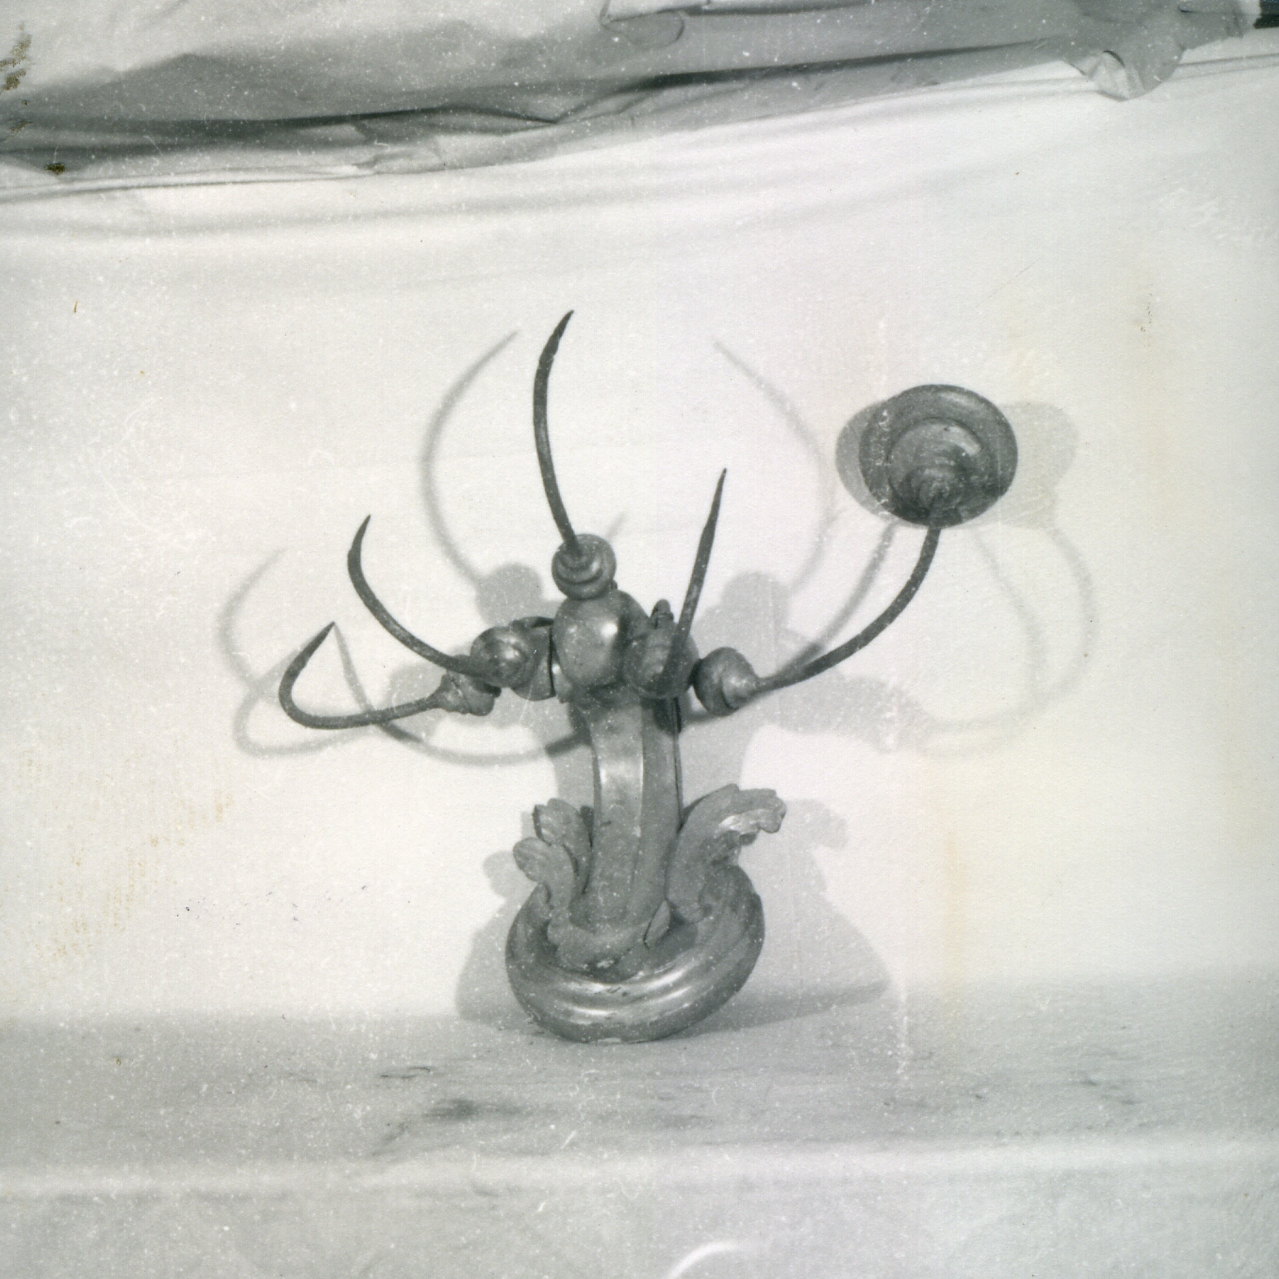 LAMPADA DA PARETE, SERIE - manifattura napoletana (Seconda metà sec. XIX)